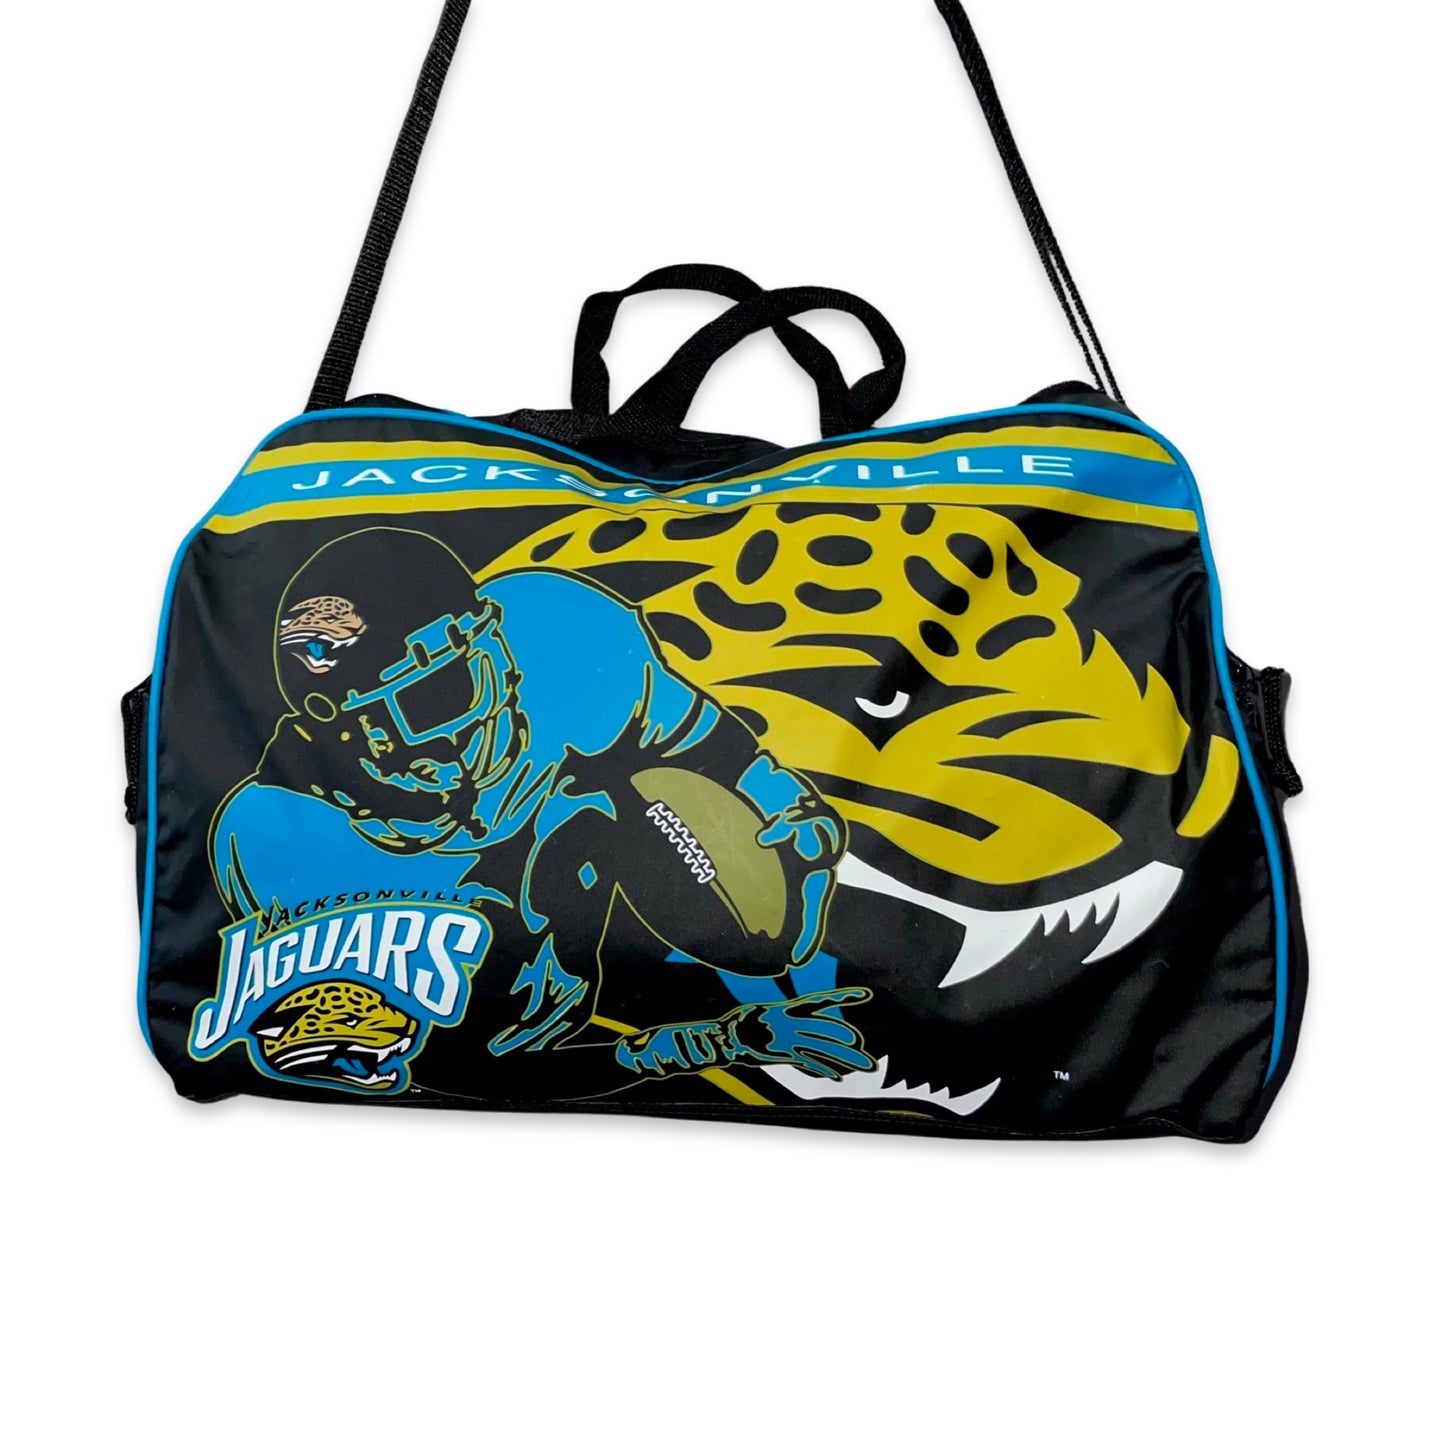 Vintage Jacksonville Jaguars duffel bag